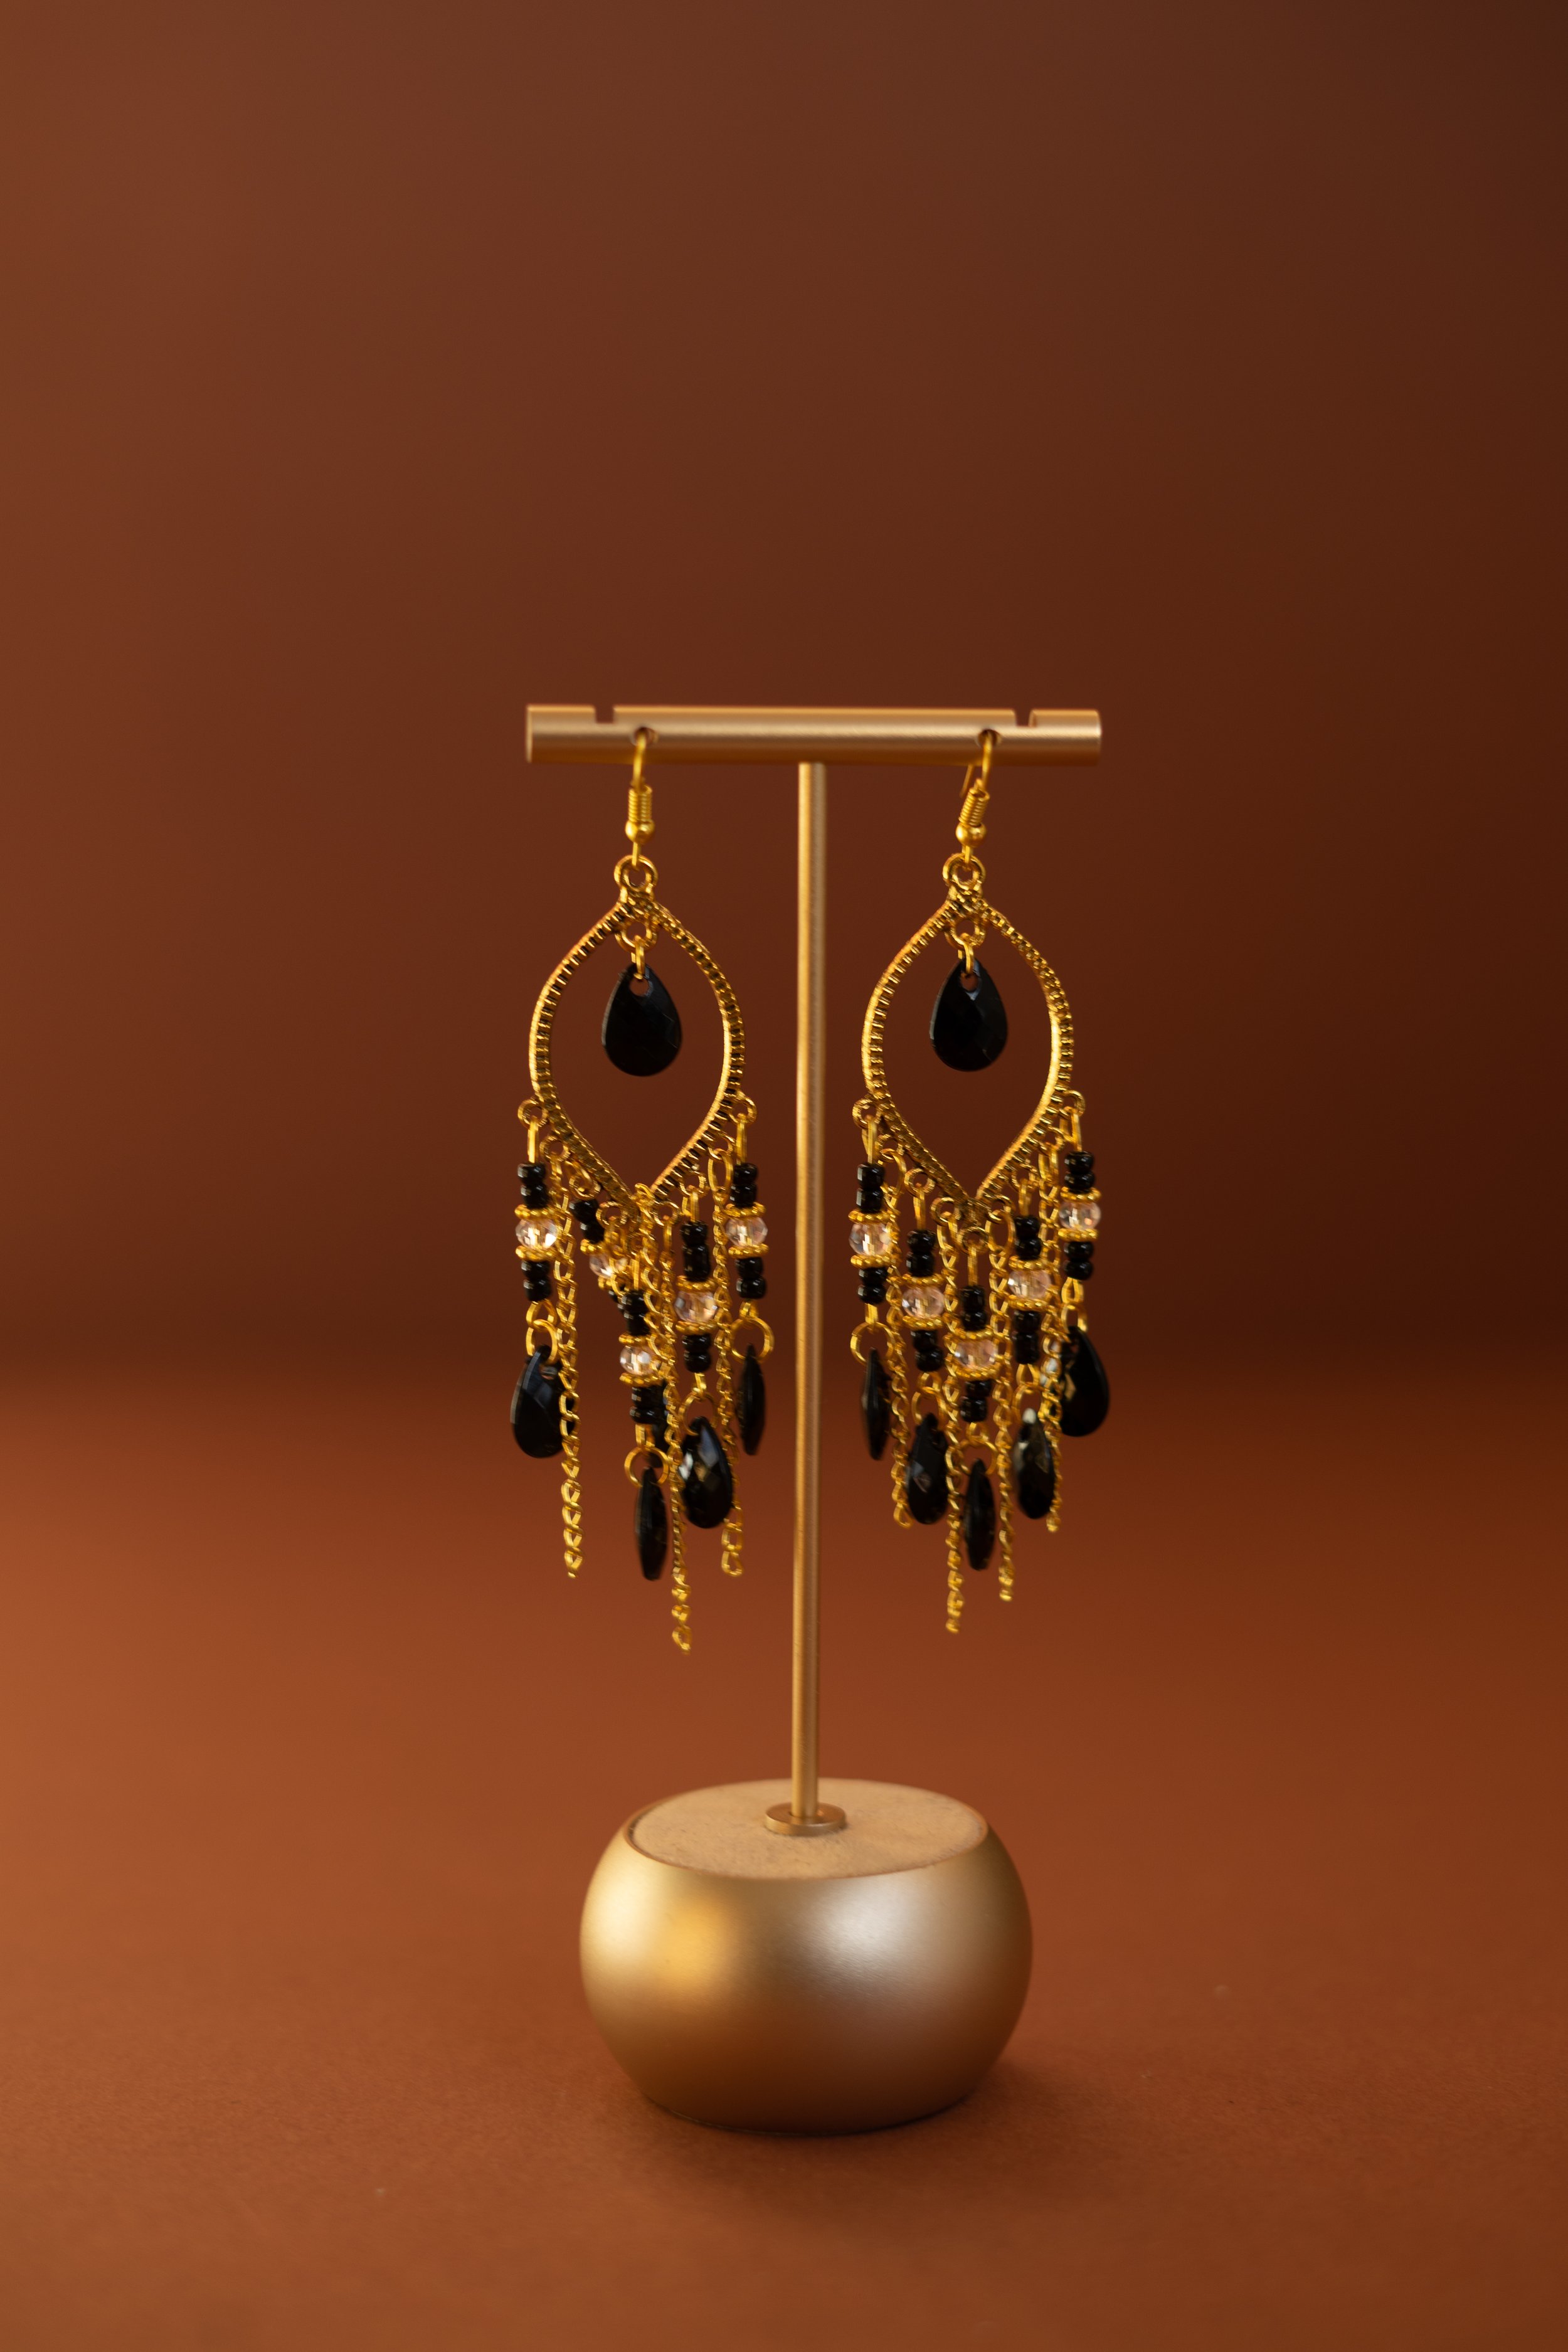 Solid 21k gold stud earrings 1.28 grams | eBay